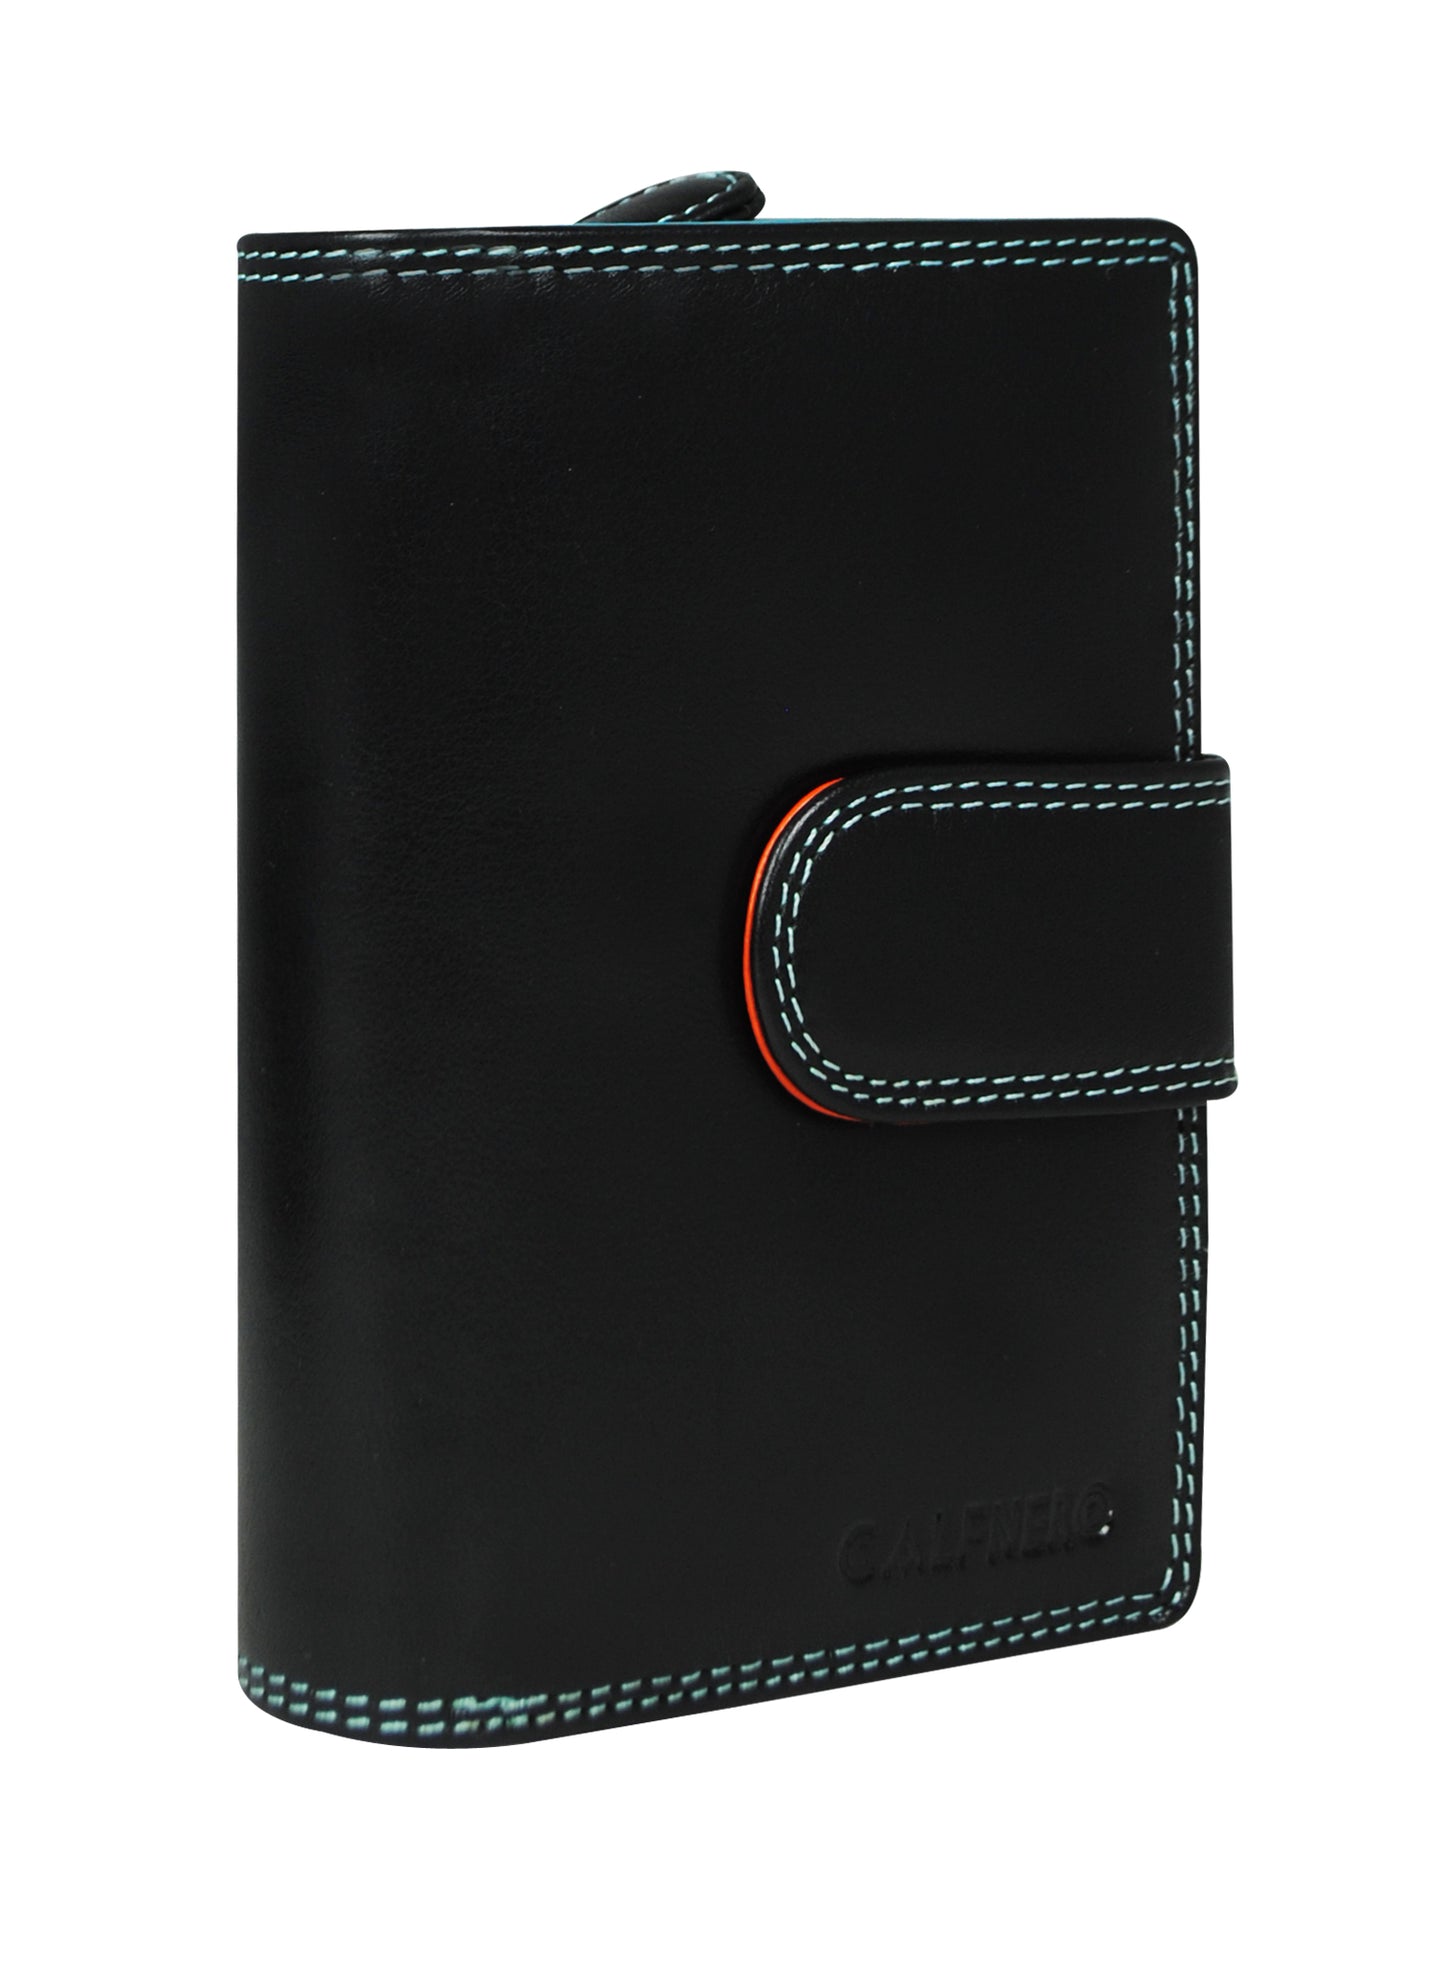 Calfnero Genuine Leather Women's Wallet (6081-Black-Multi)